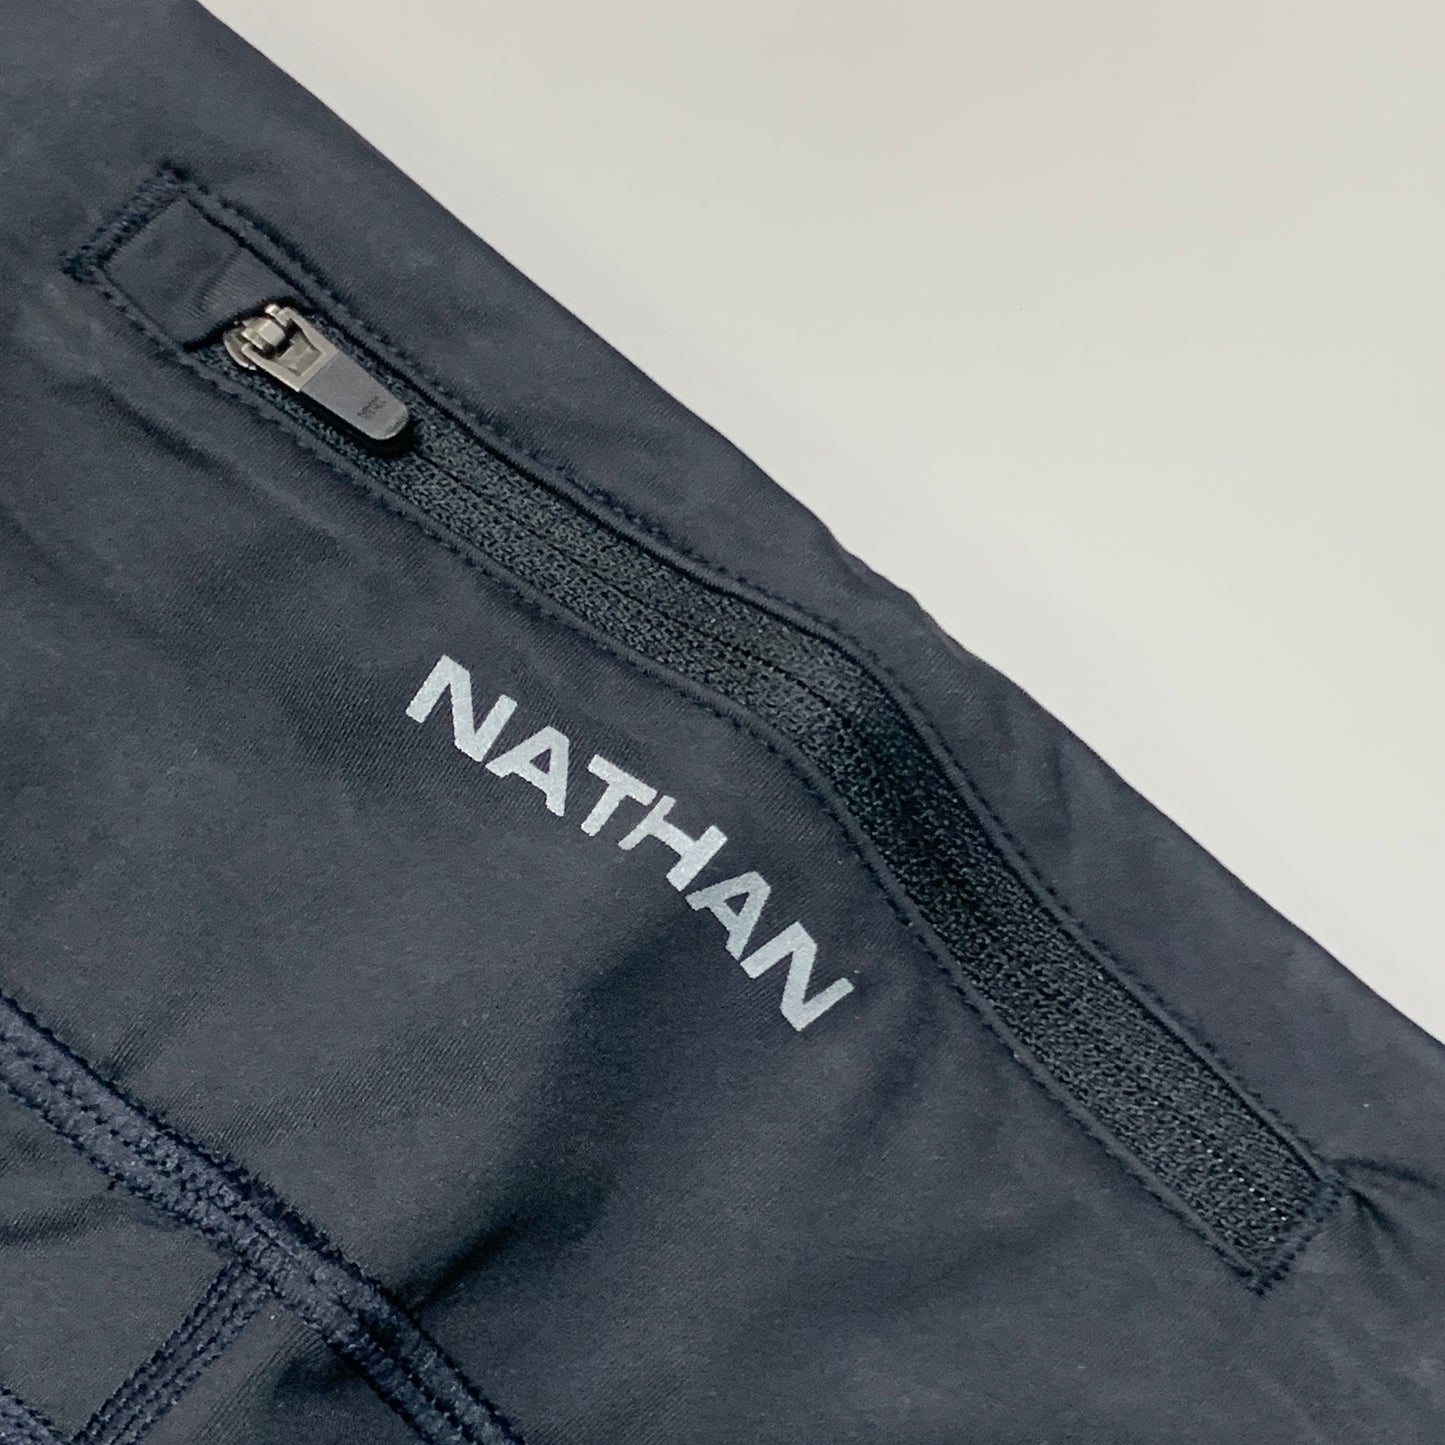 NATHAN Interval 6" Inseam Bike Short Women's Black Size Large NS51520-00001-L